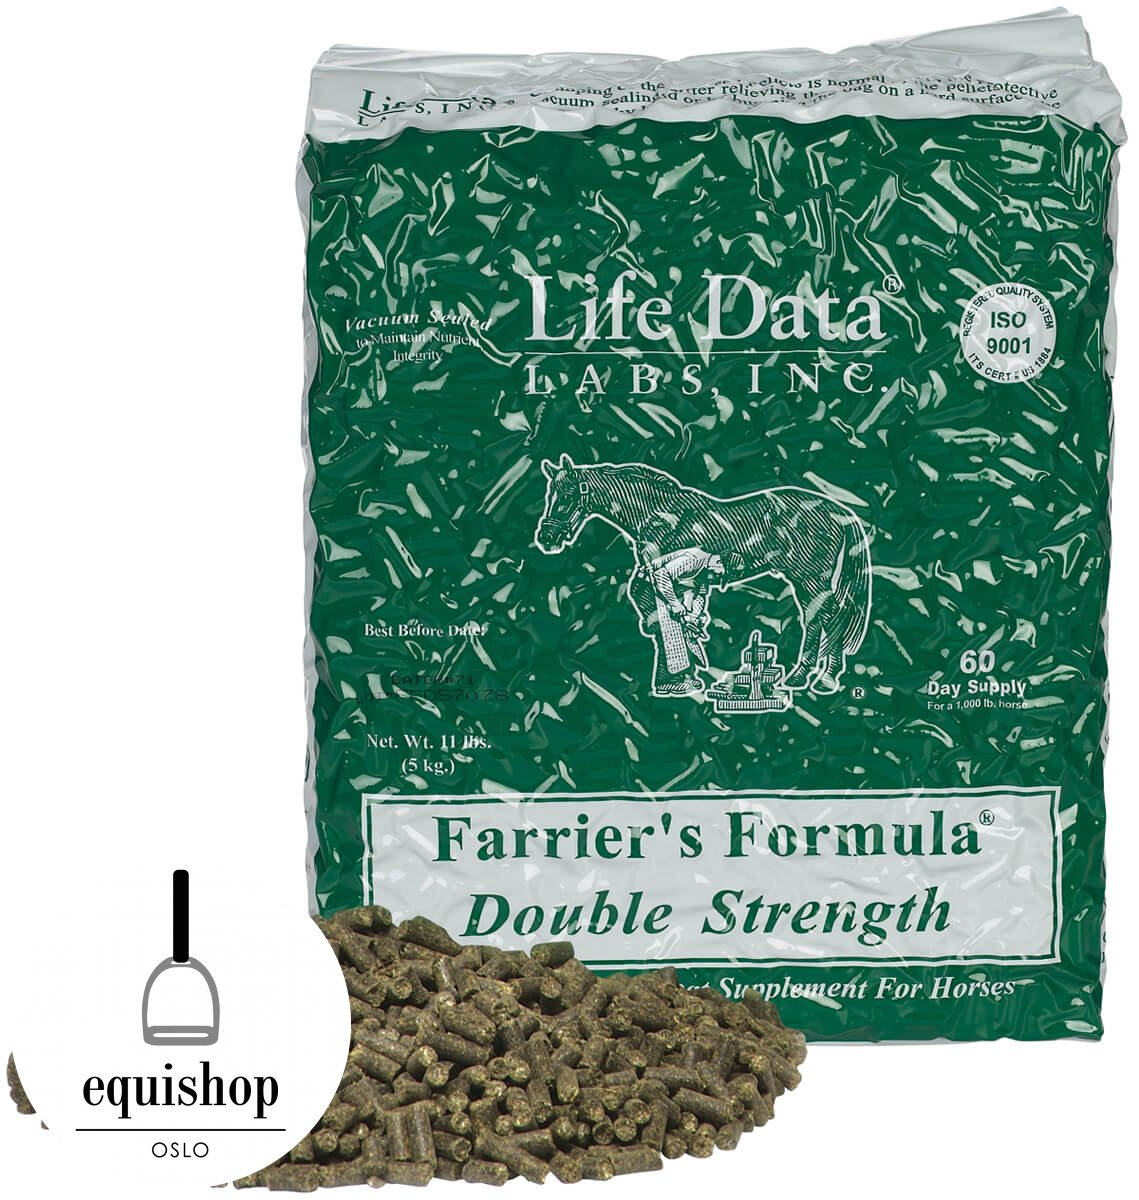 Life Data farriers formula DC 5kg